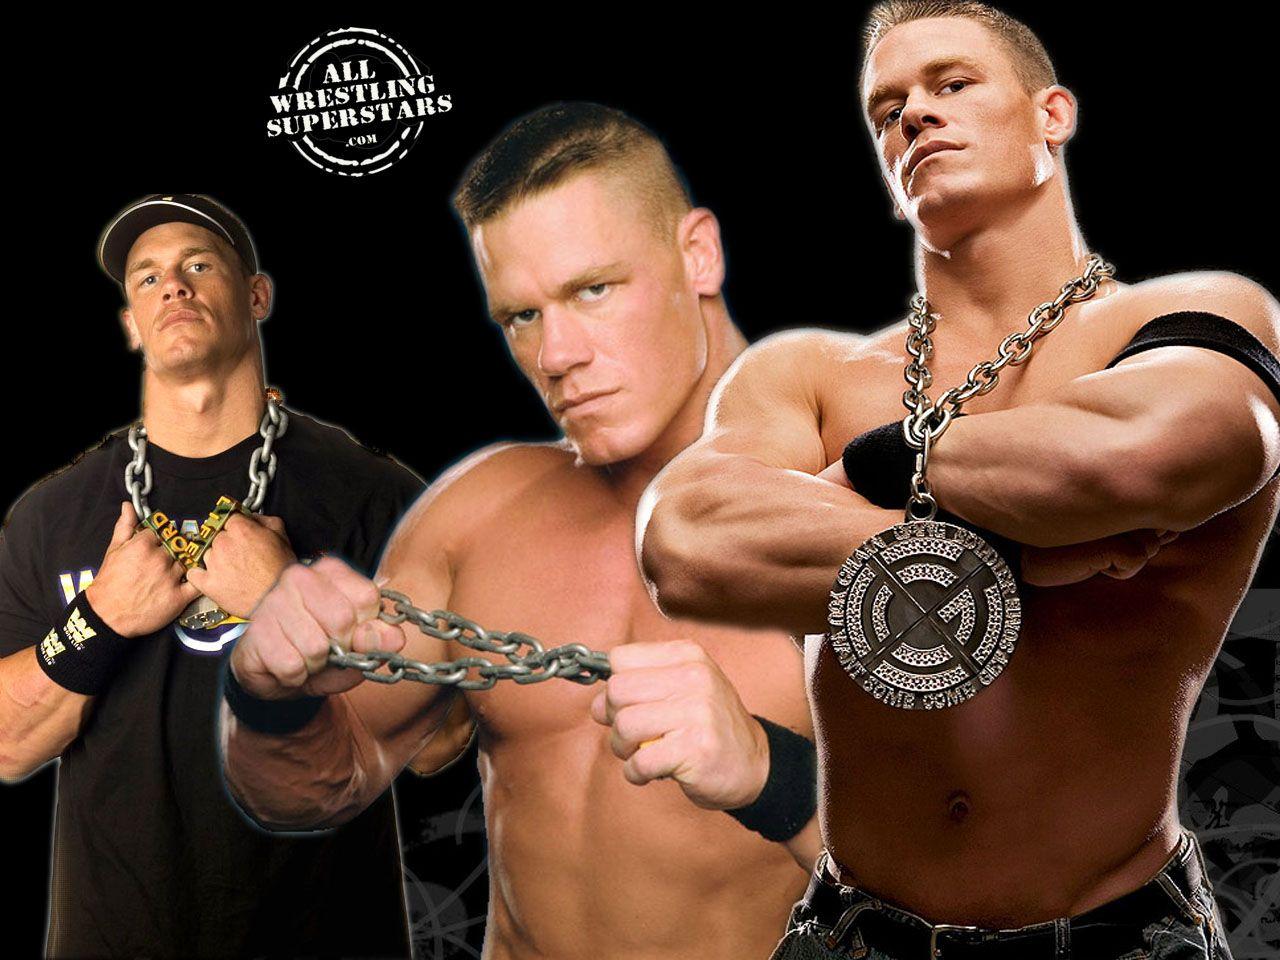 John Cena Wallpaper, Picture, Image